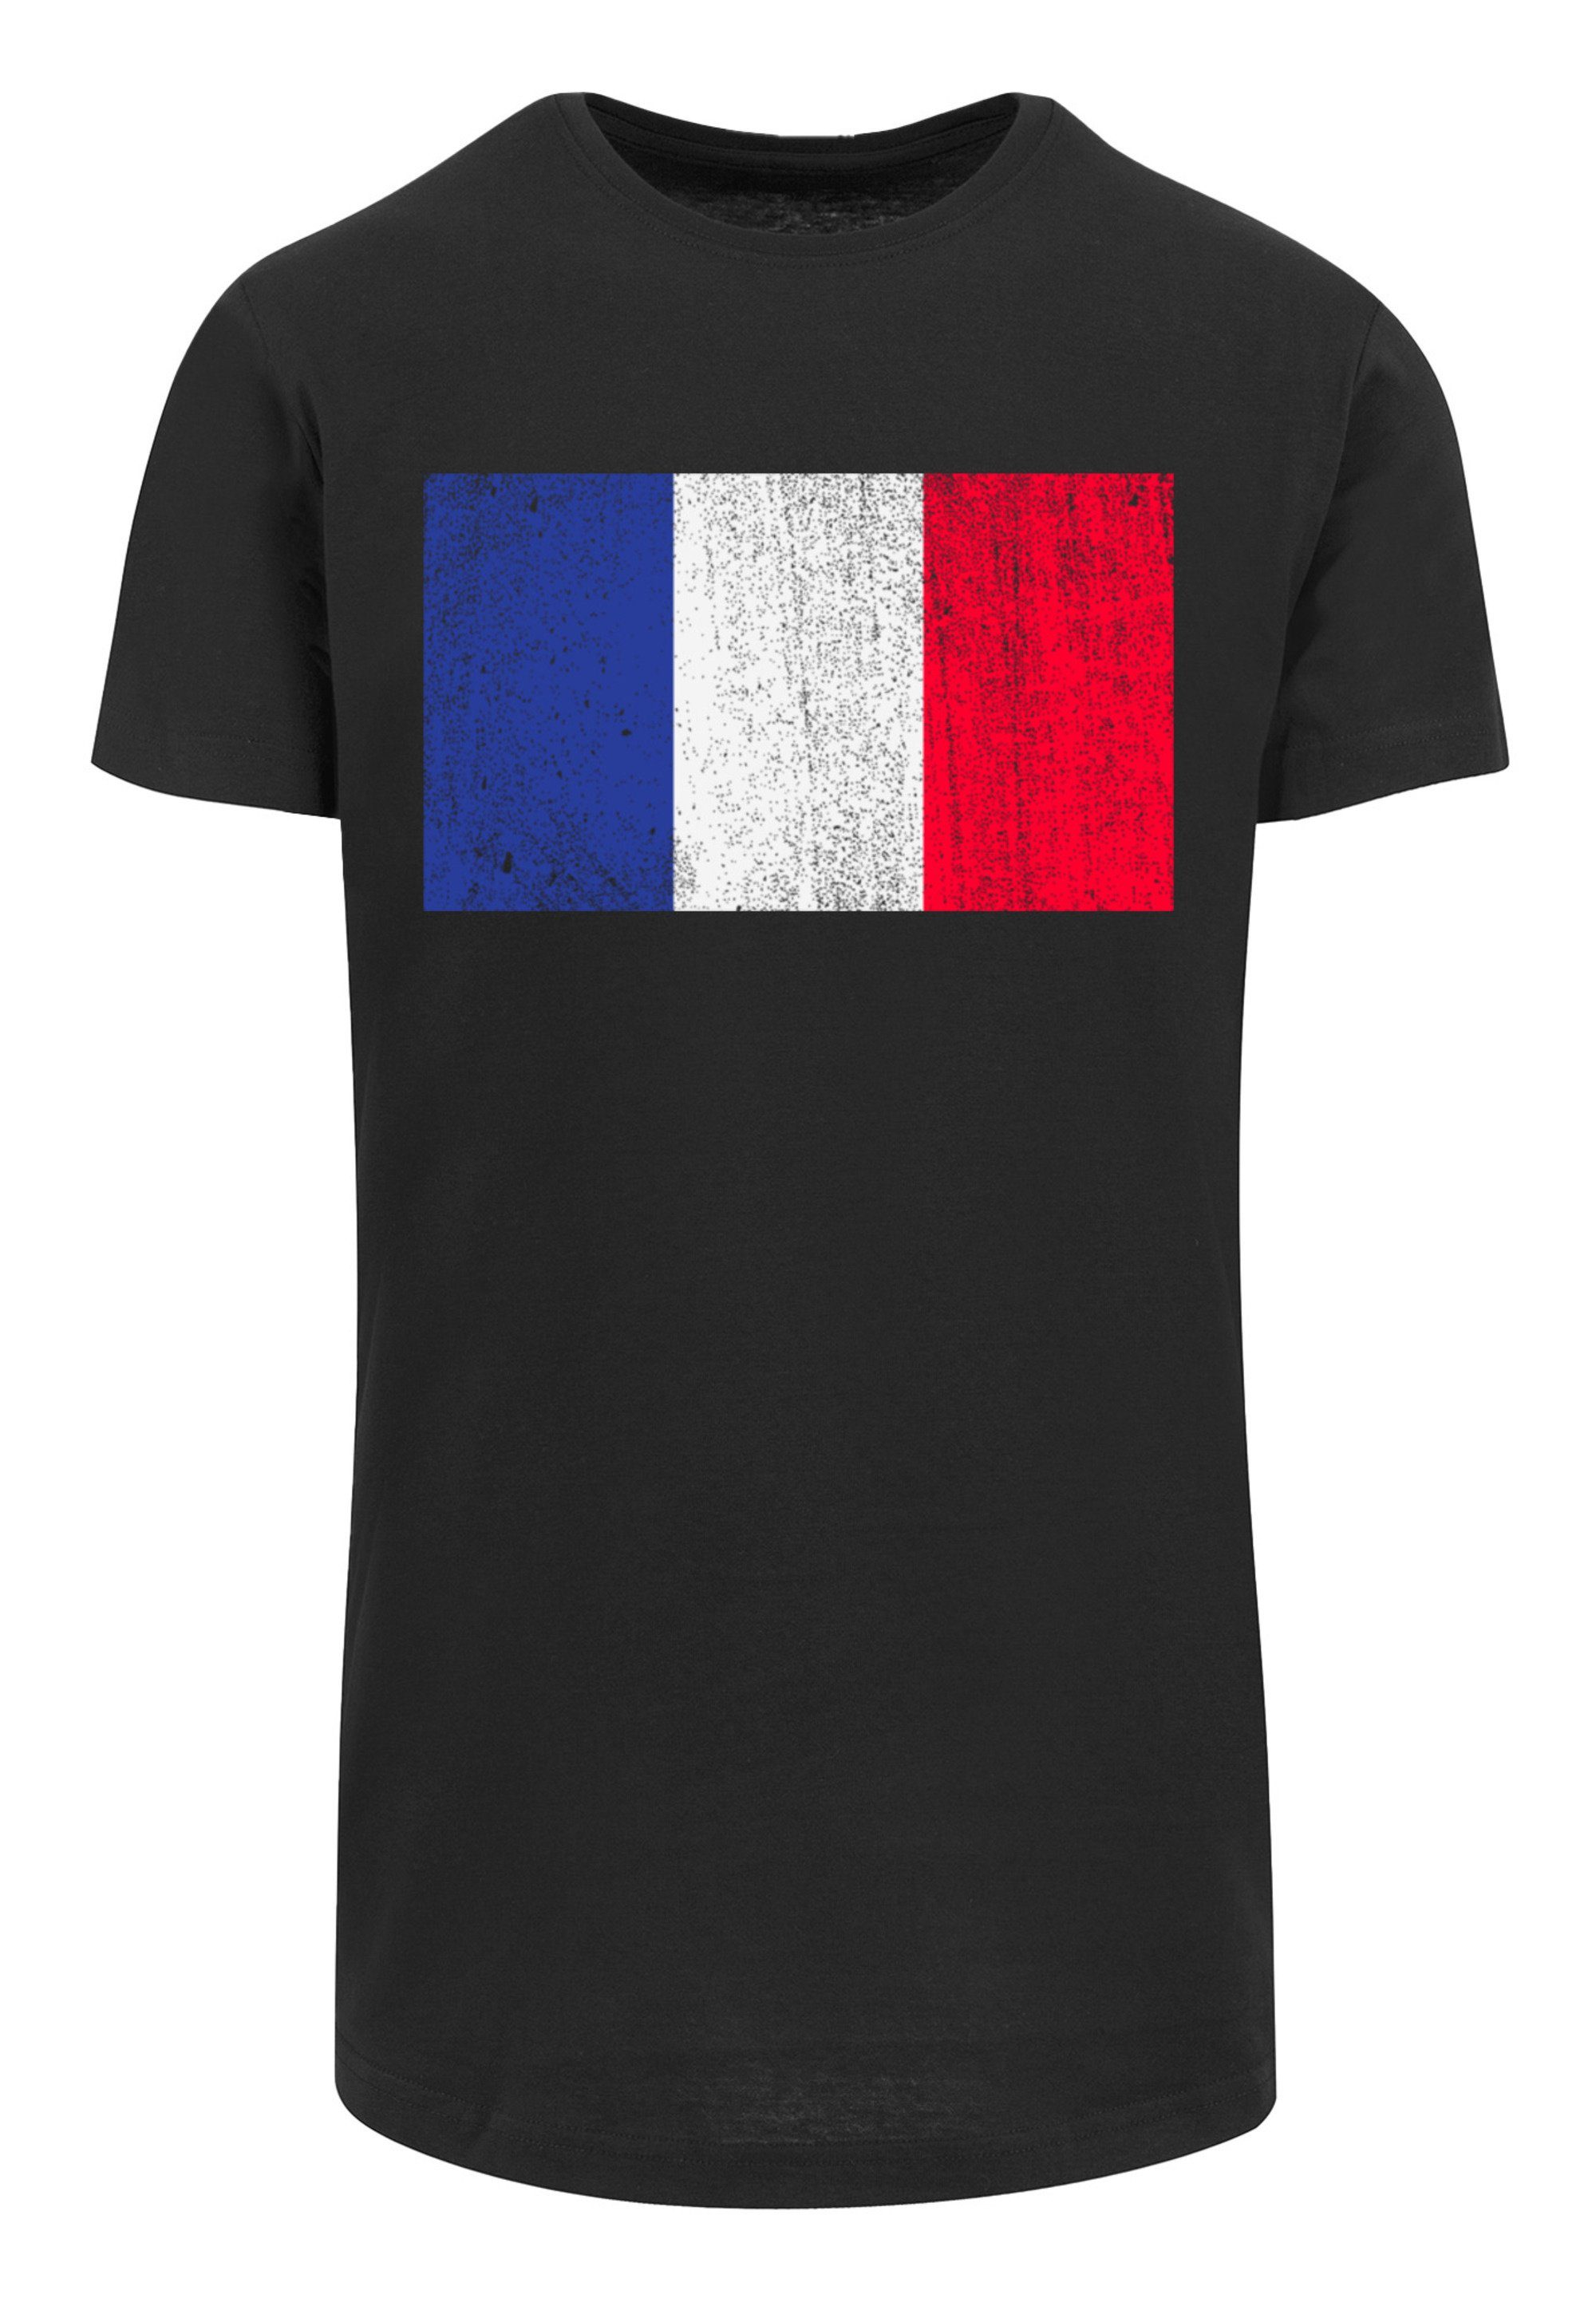 F4NT4STIC T-Shirt schwarz Print Flagge Frankreich France distressed